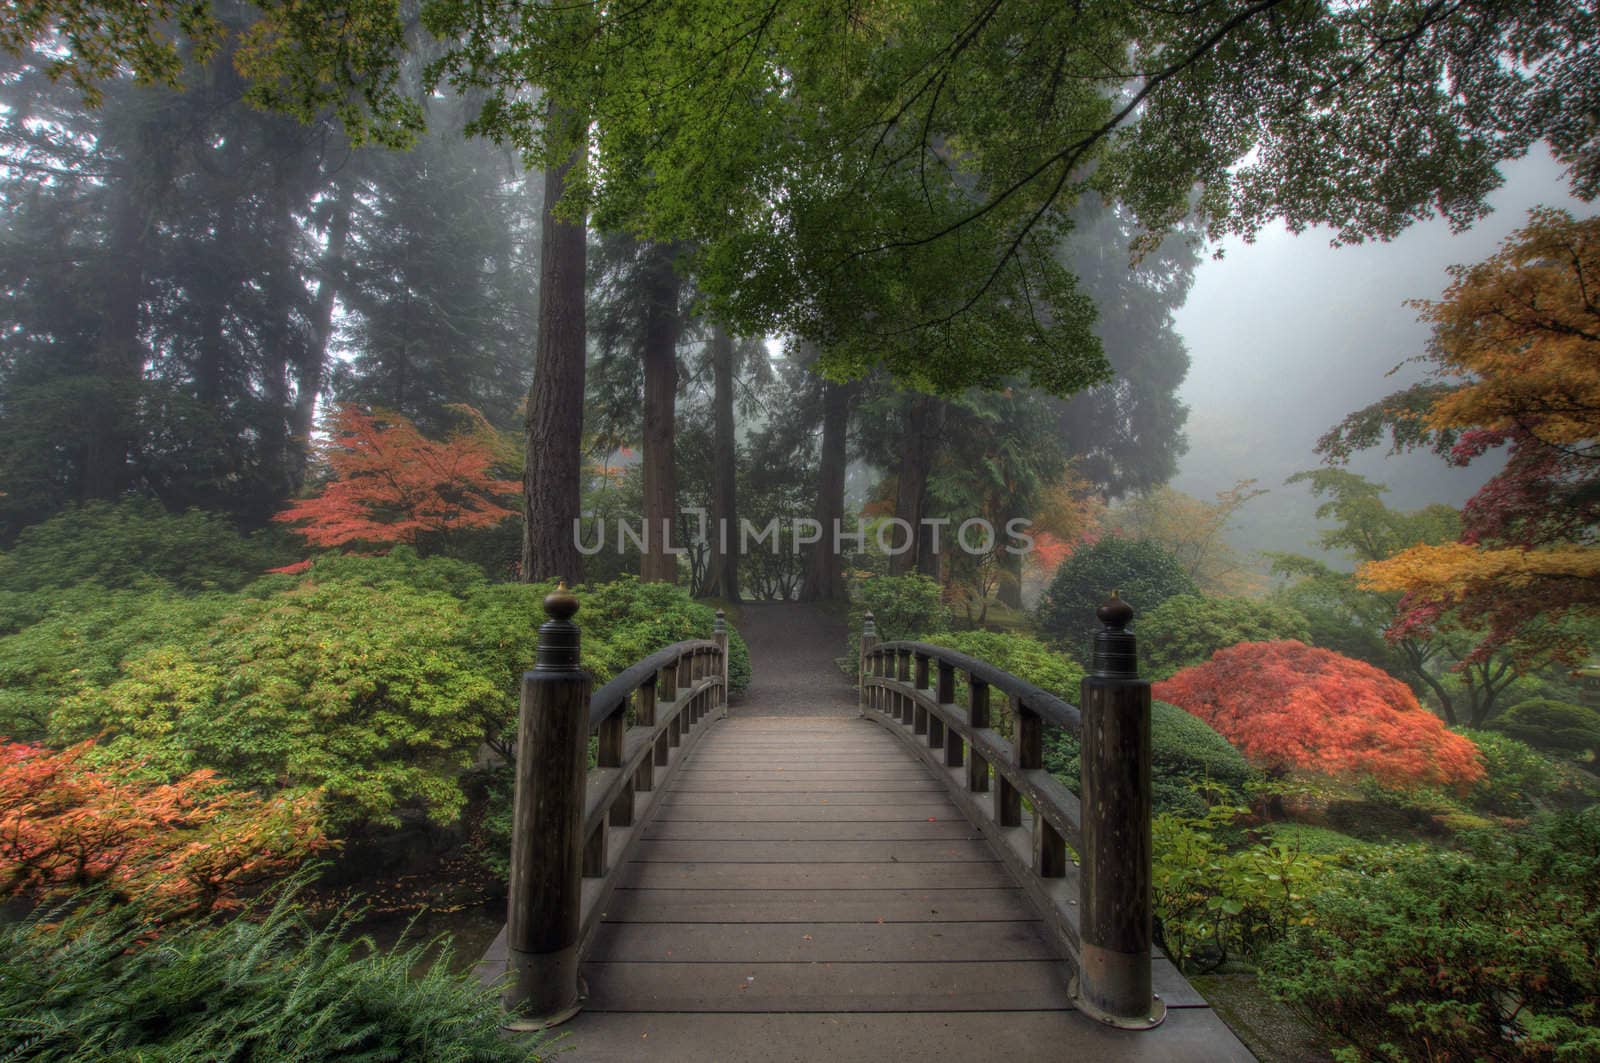 The Bridge in Portland Japanese Garden in the Fall